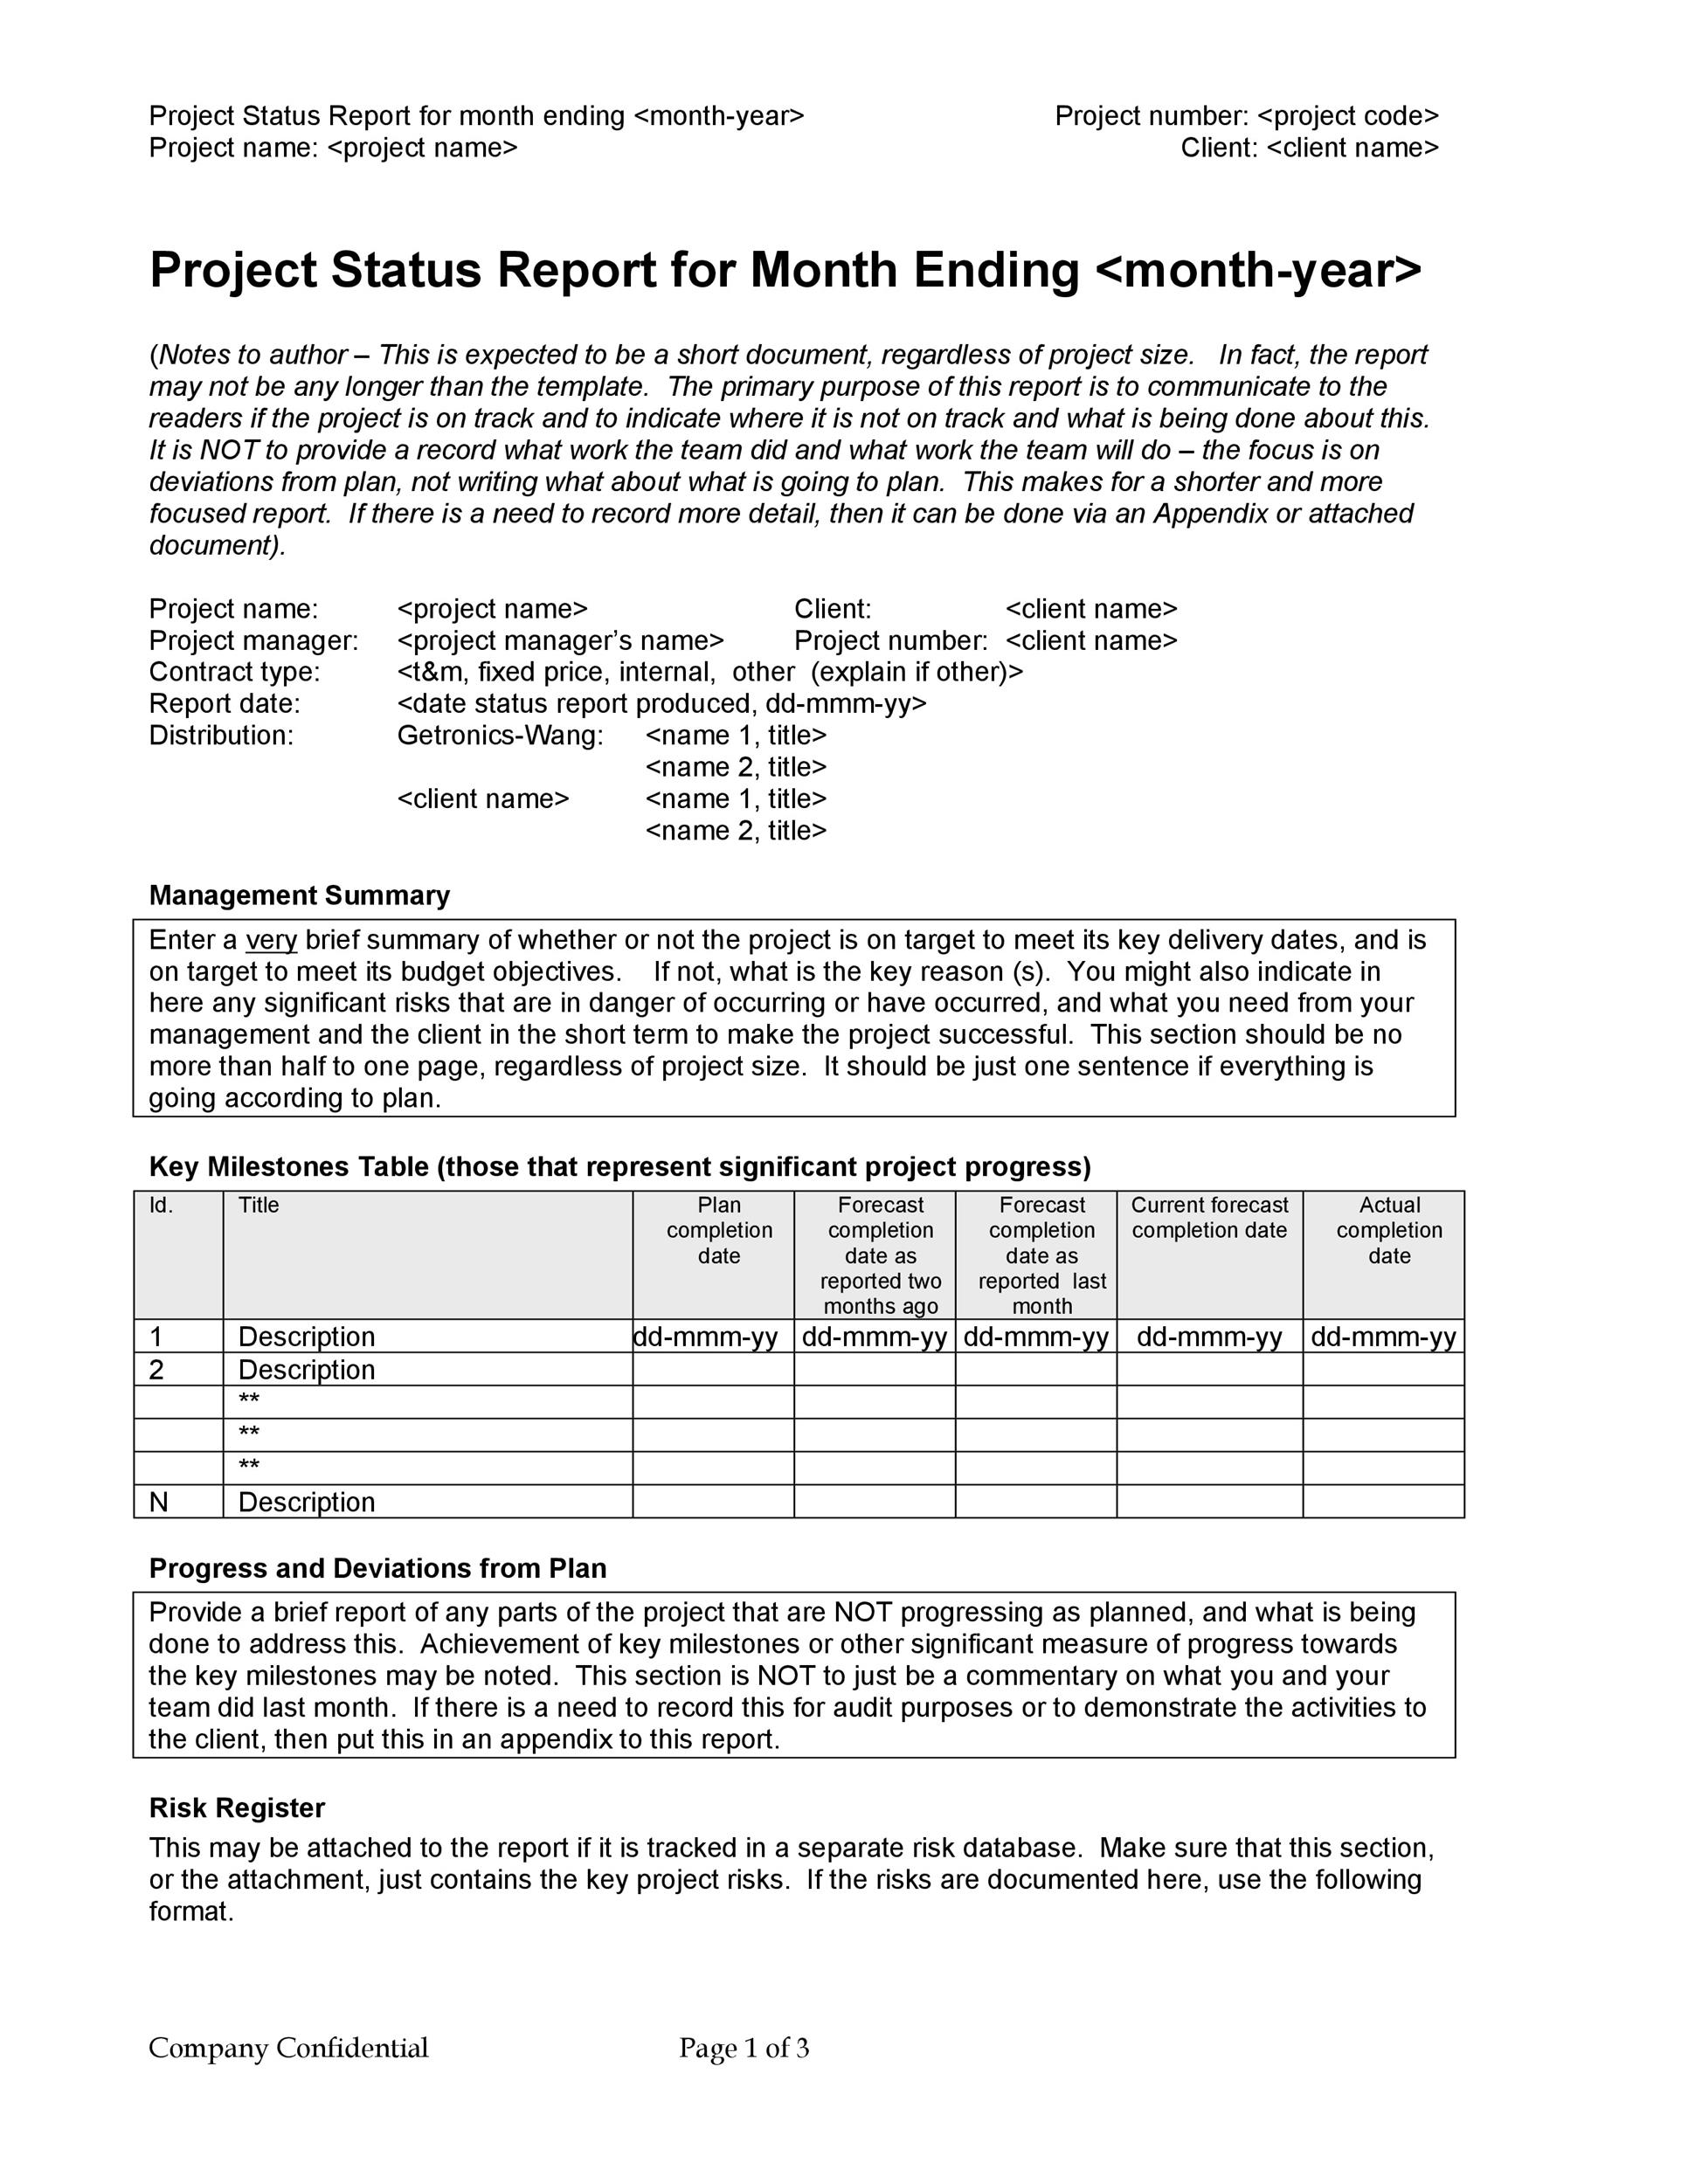 Construction Progress Report Template from templatelab.com